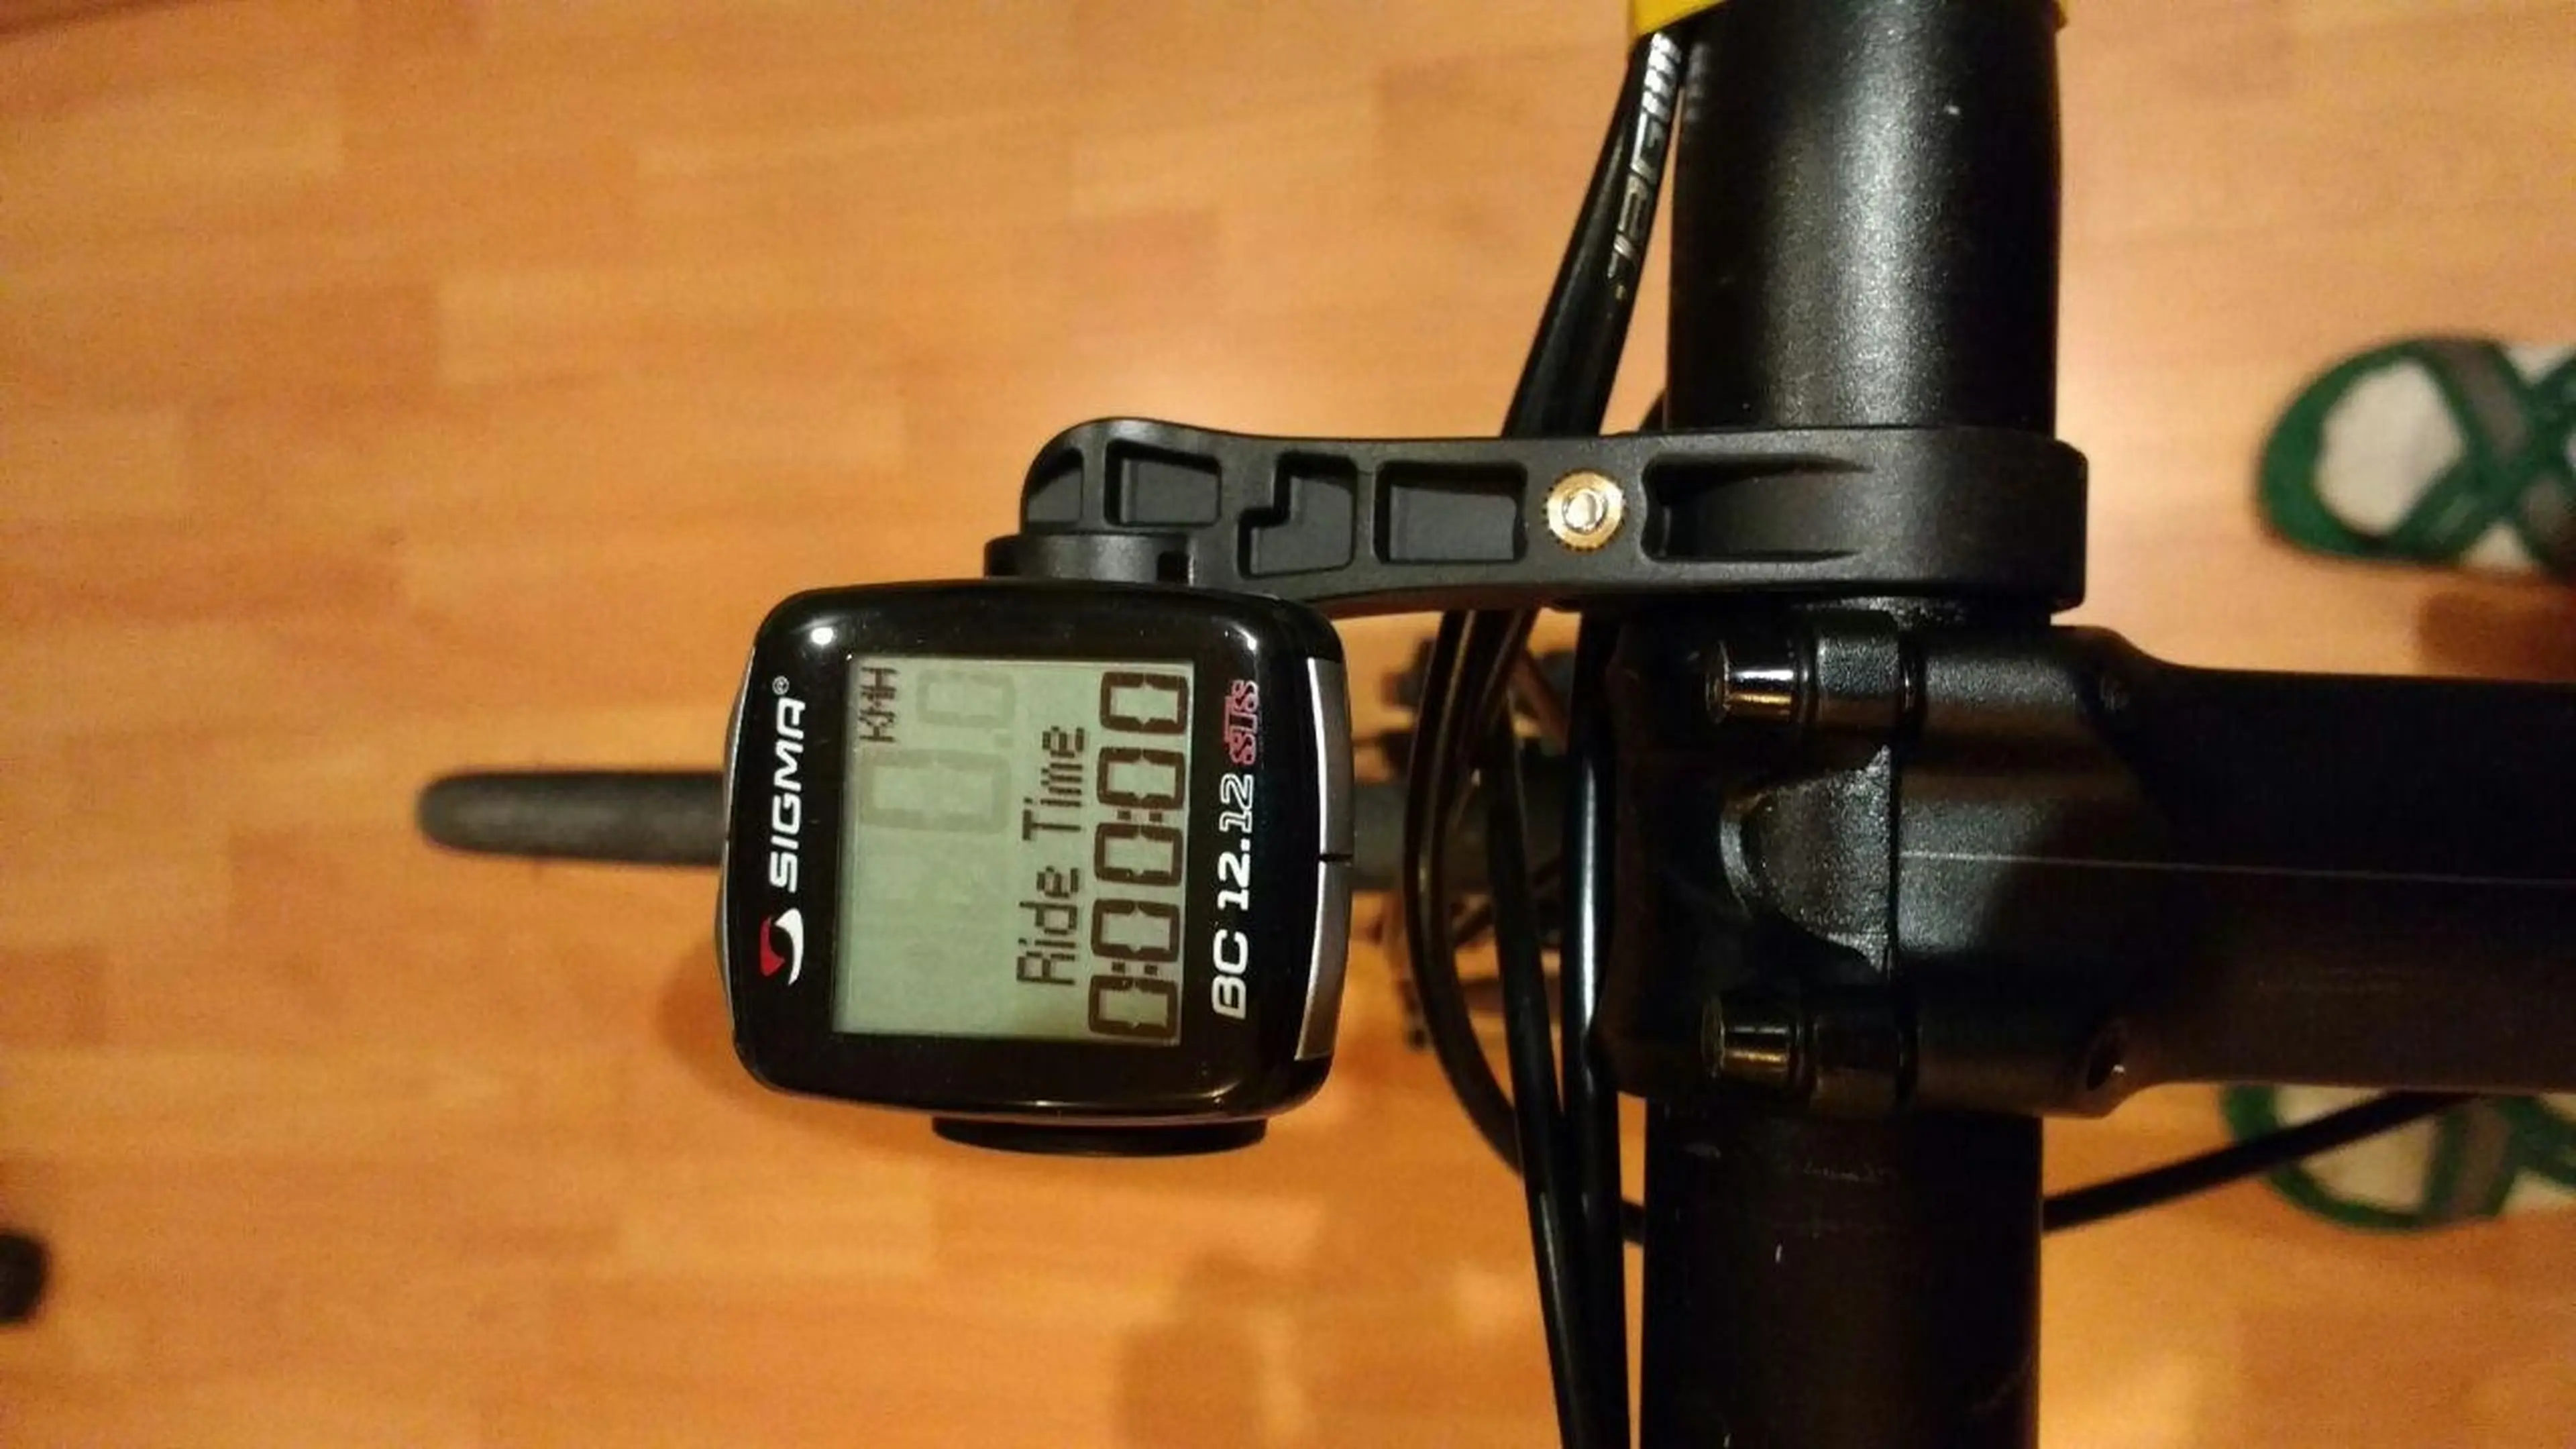 Image Extensie ghidon bicicleta pentru GPS, lanterna, ciclocomputer, telefon etc.